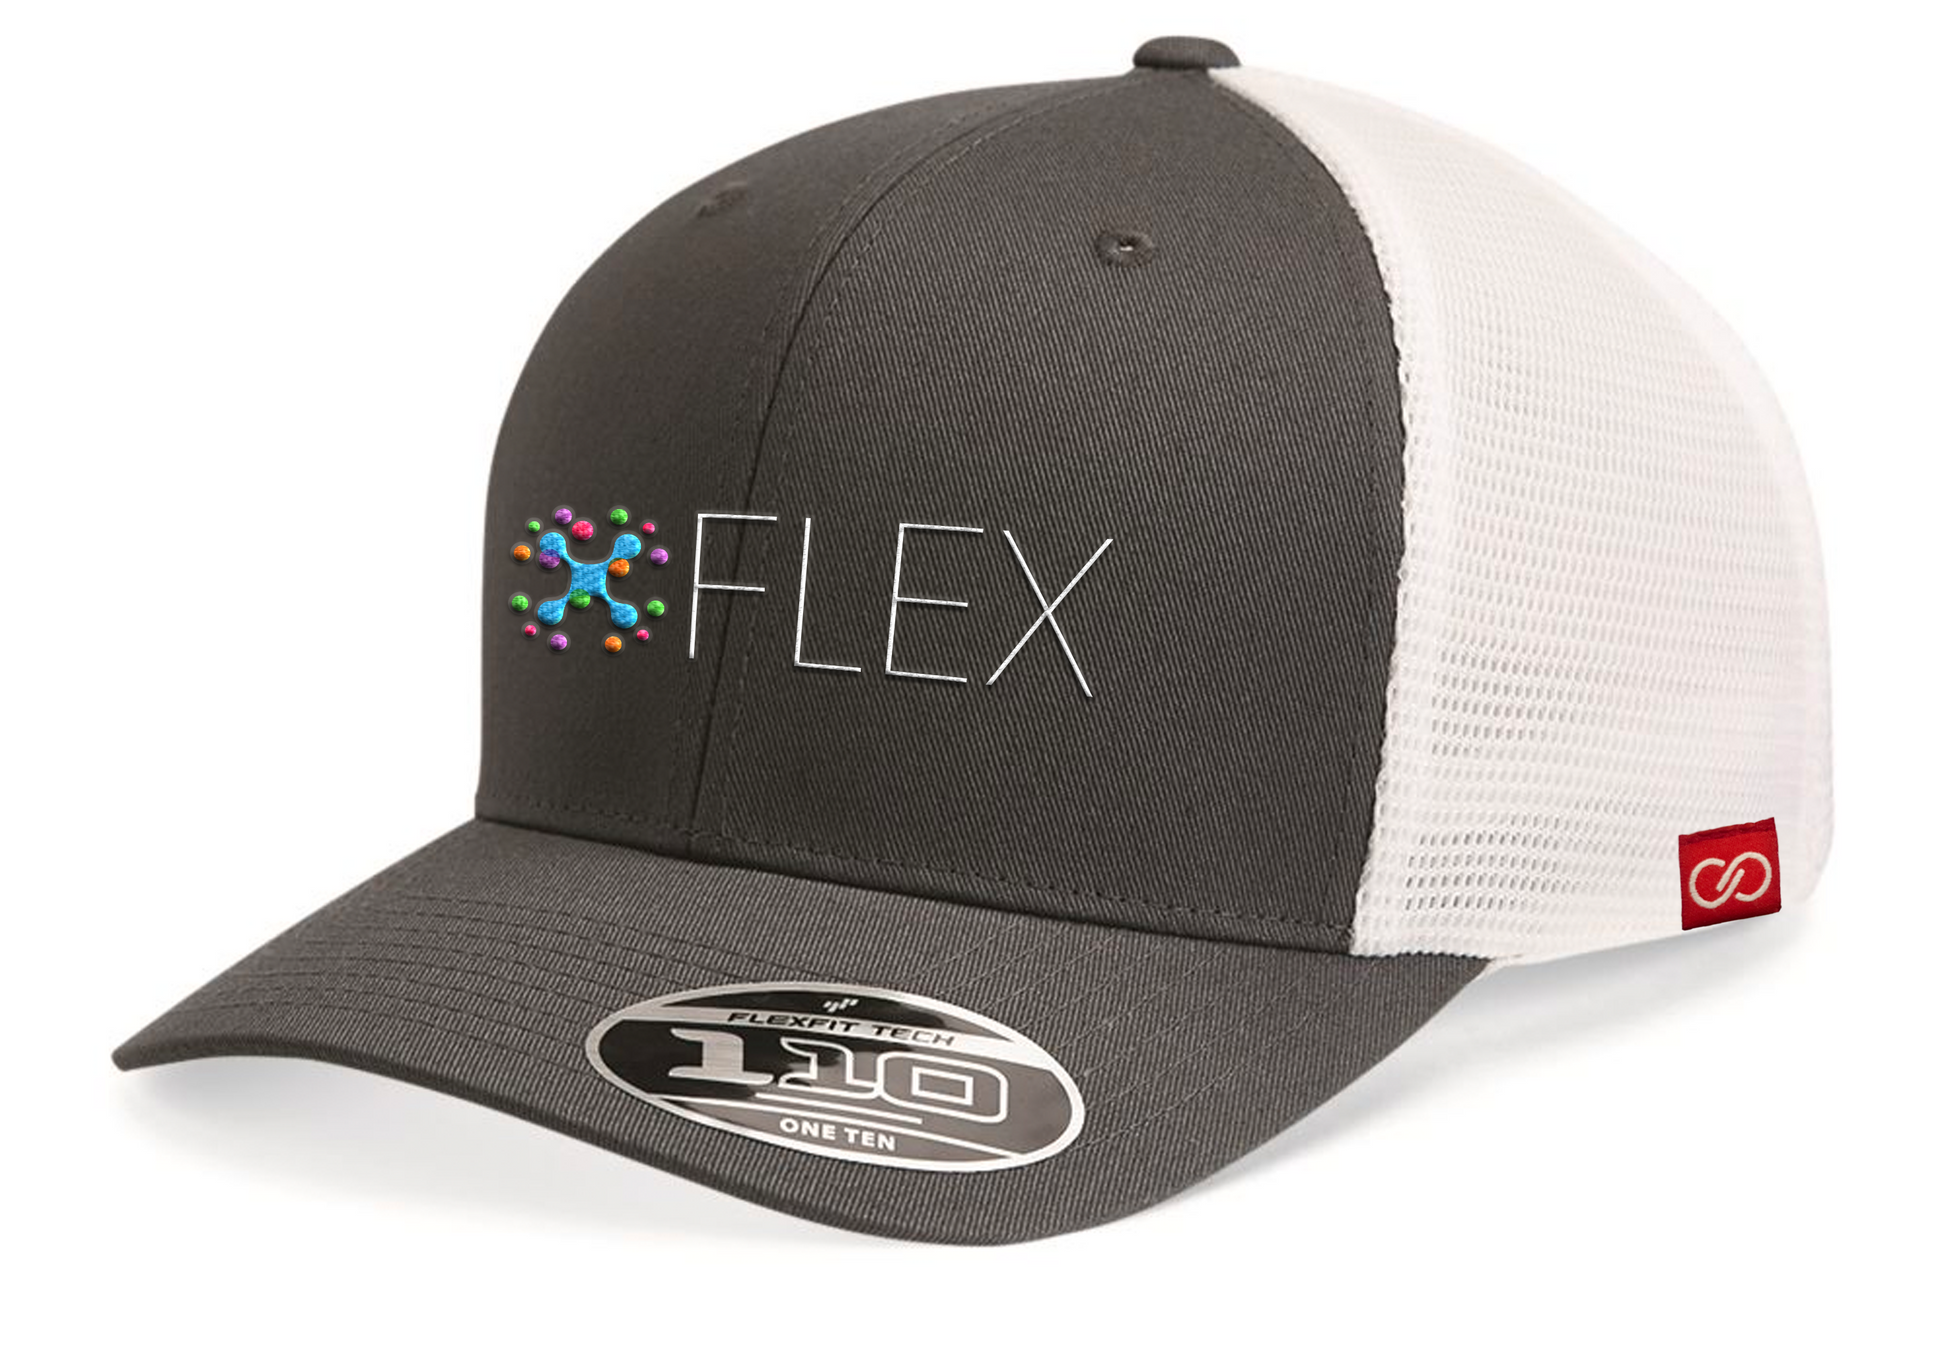 FLEX charcoal gray / white FLEX snapback – Gear hat